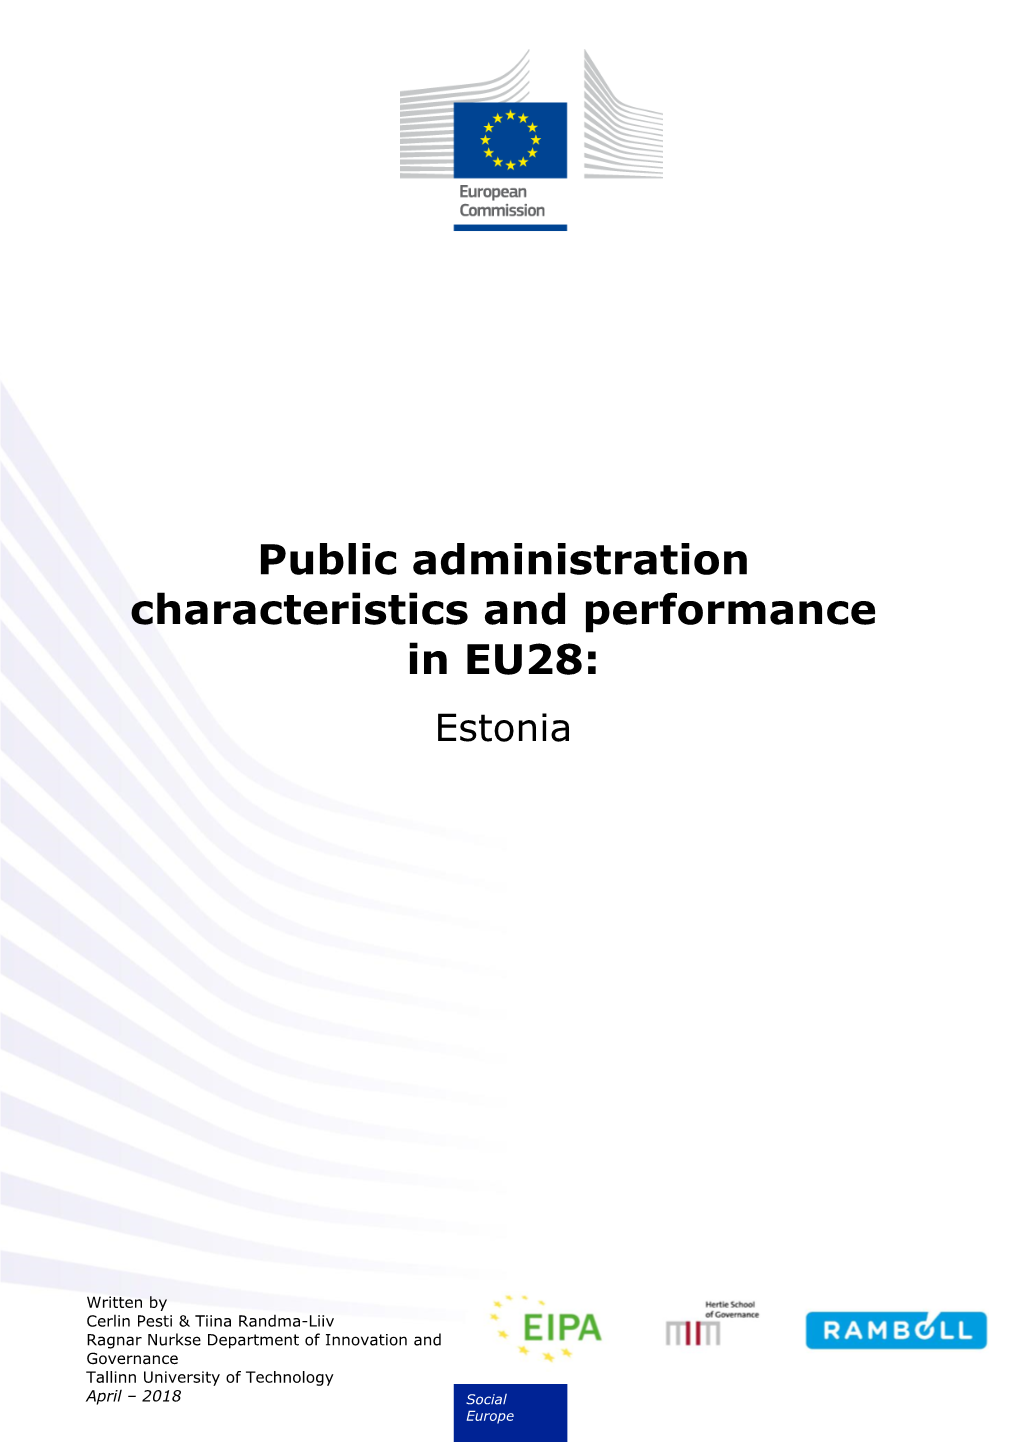 Public Administration Characteristics and Performance in EU28: Estonia